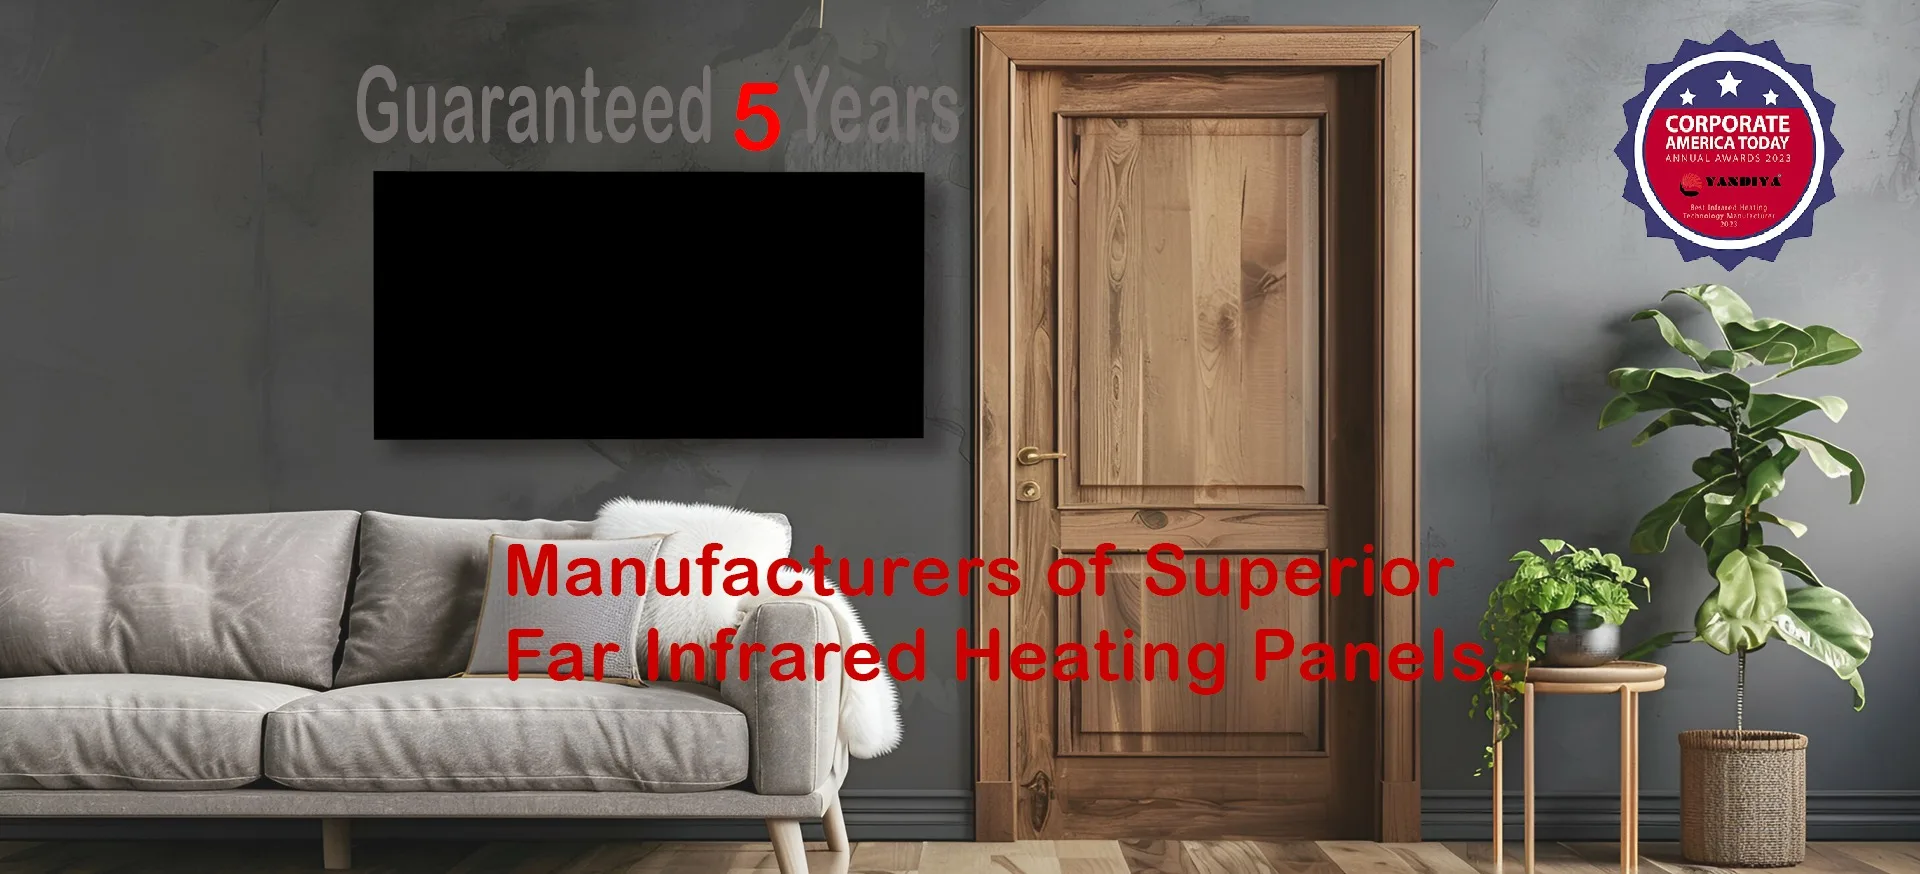 900watt Glass Infrared Heating Panel, Manufactured by Yandiya technology